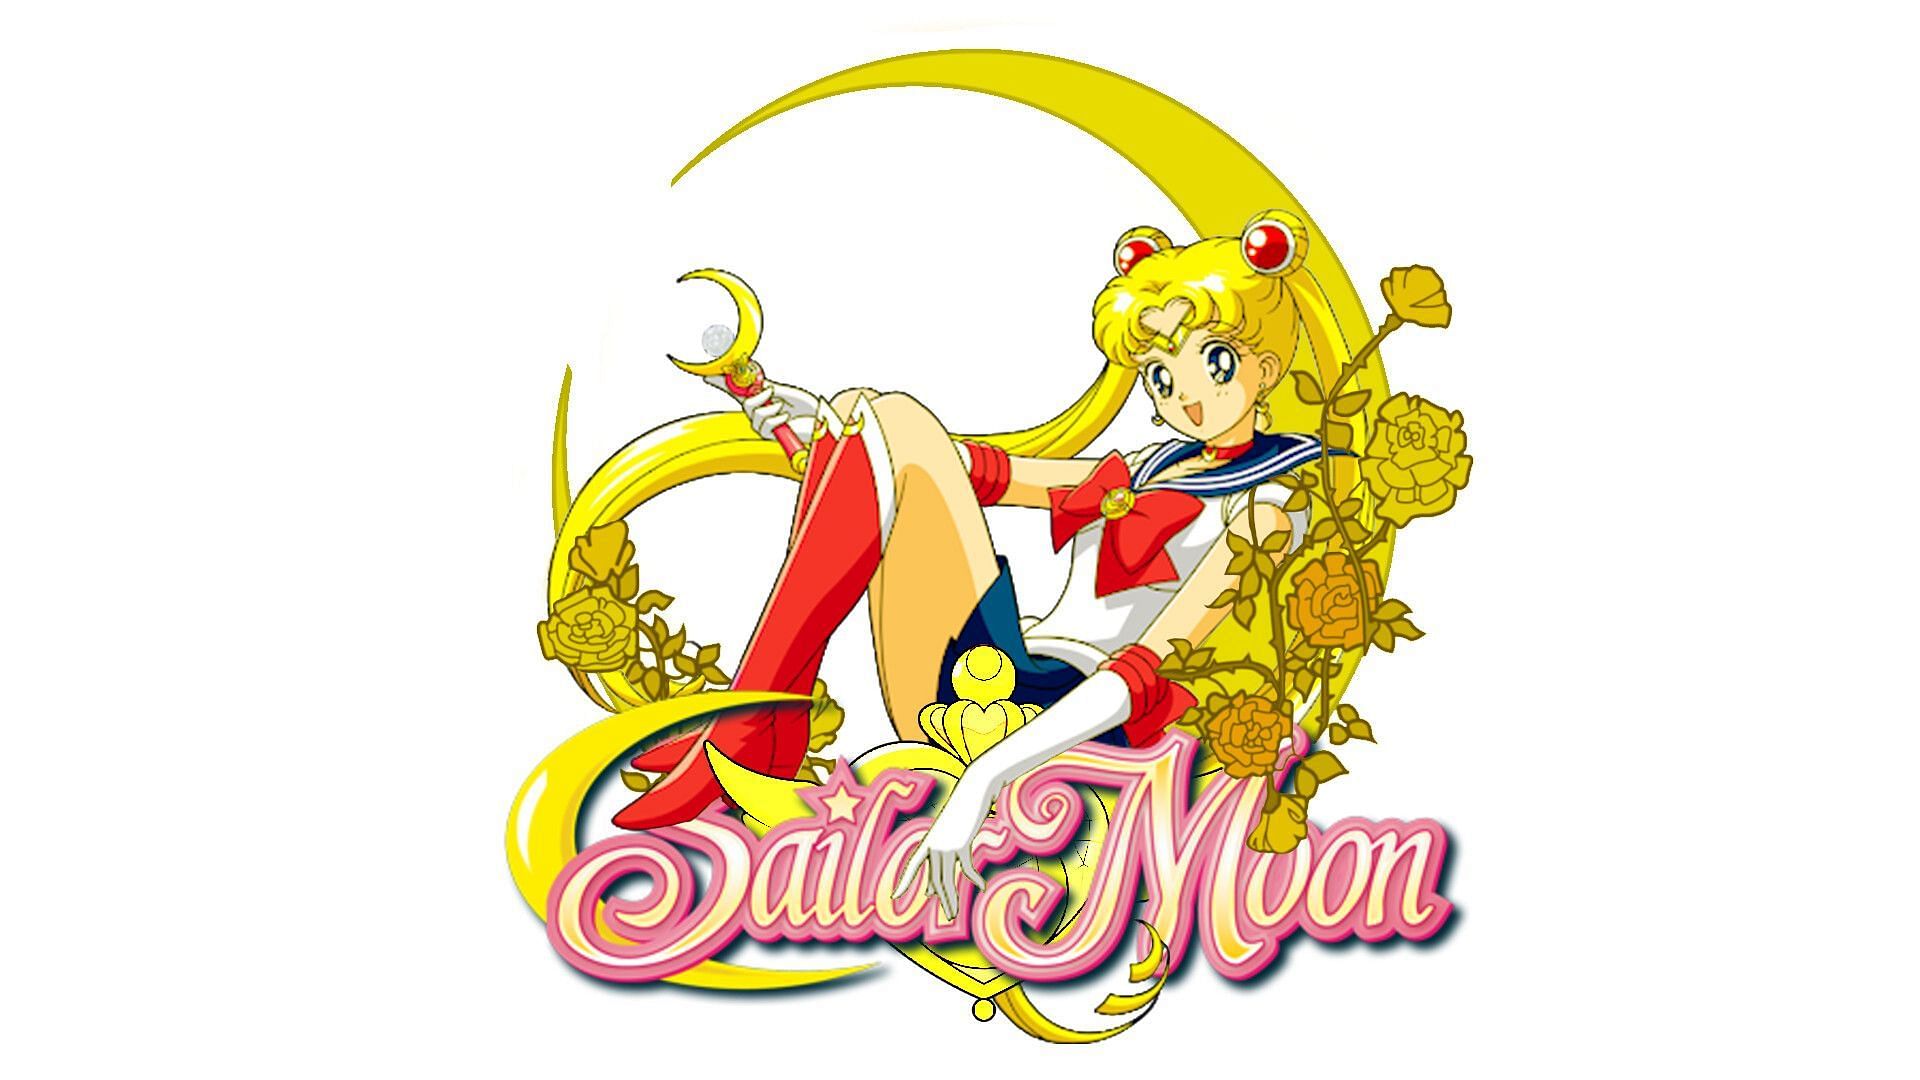 Premium Photo | Sailor moon fan art from the anime